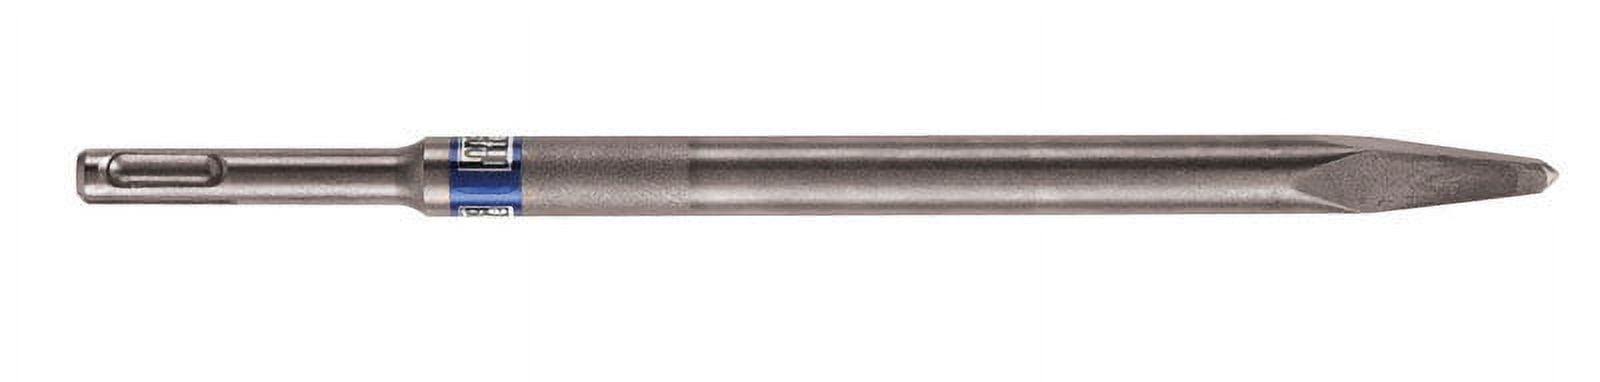 Hs1472 10 In. Point Sds-plus Bulldog Extreme Hammer Steel